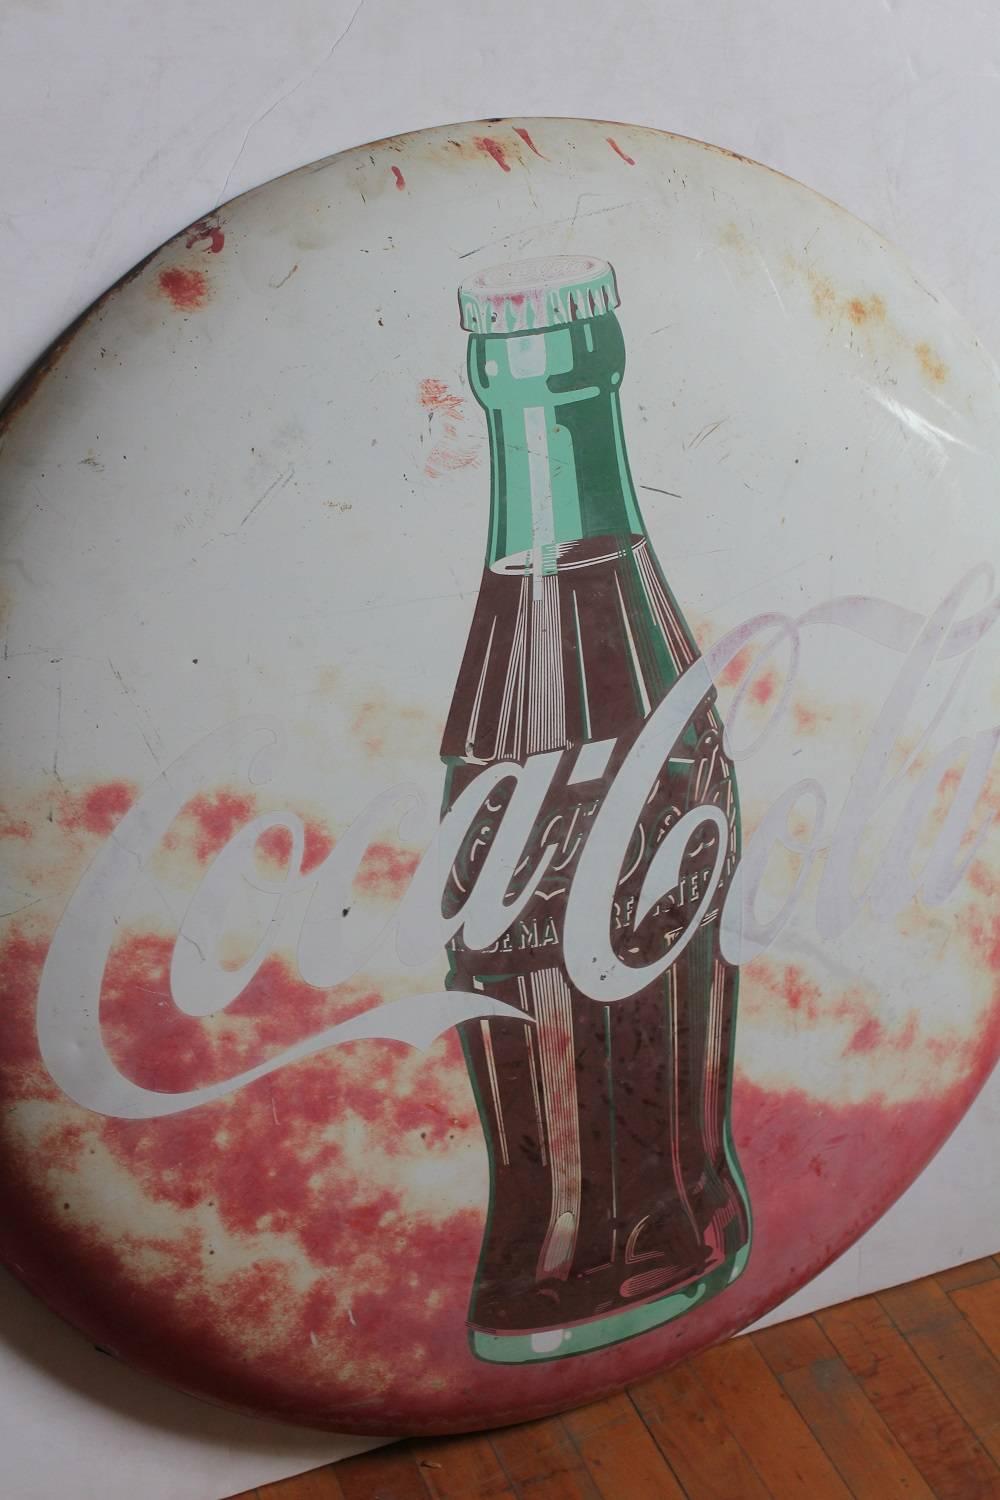 1950s coca cola advertising sign.